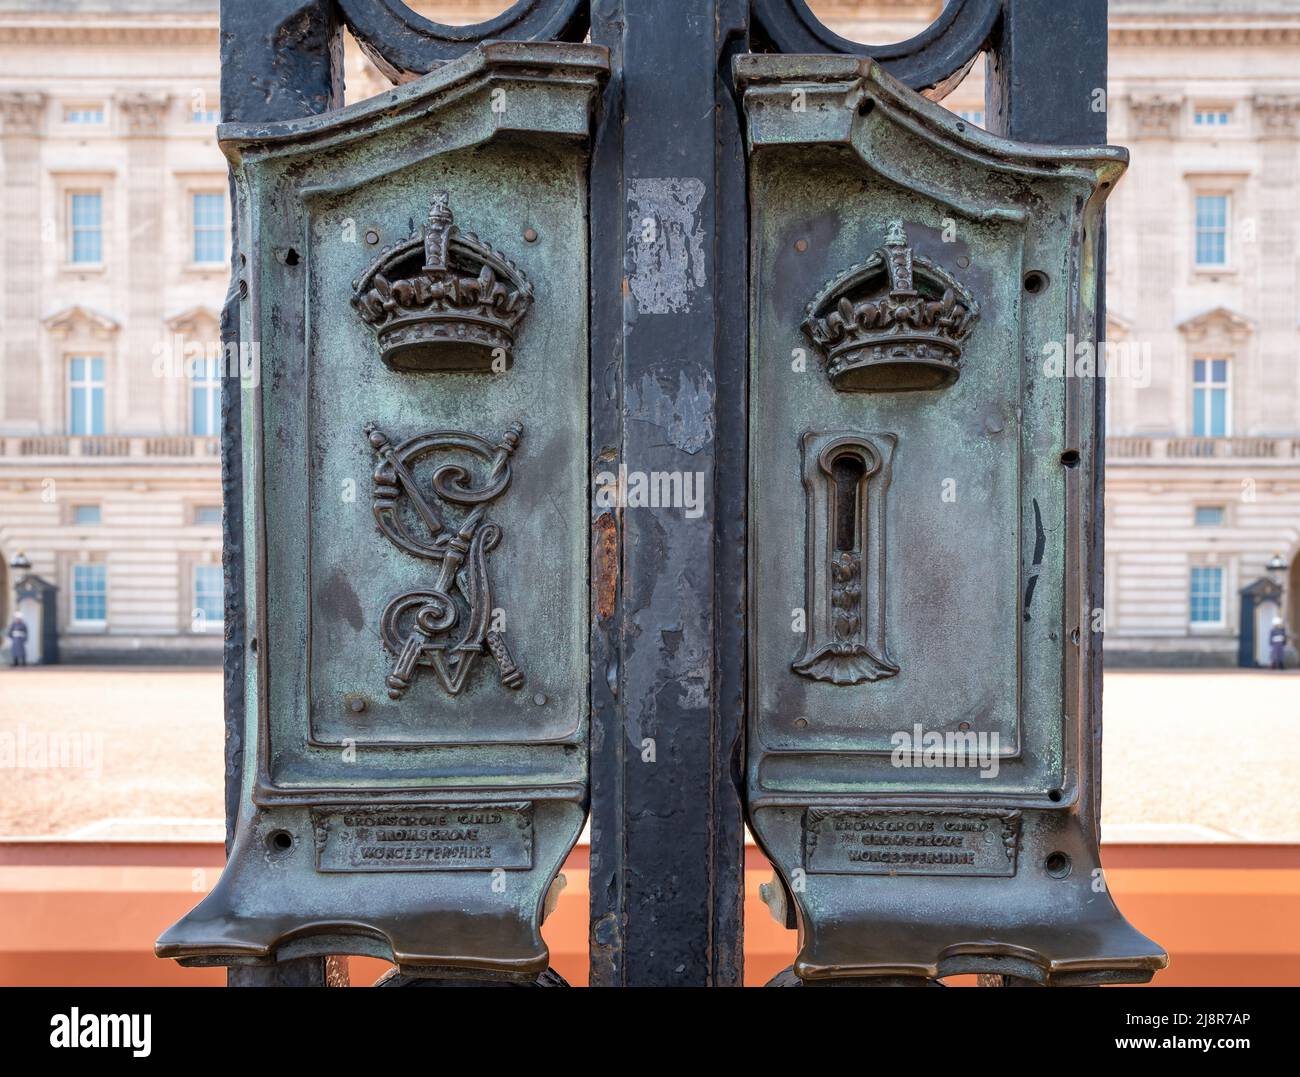 London, UK - 26 March 2022: The ornate bronze lock on the gates of Buckingham Palace, London residence of Queen Elizabeth II, who celebrates her Plati Stock Photo